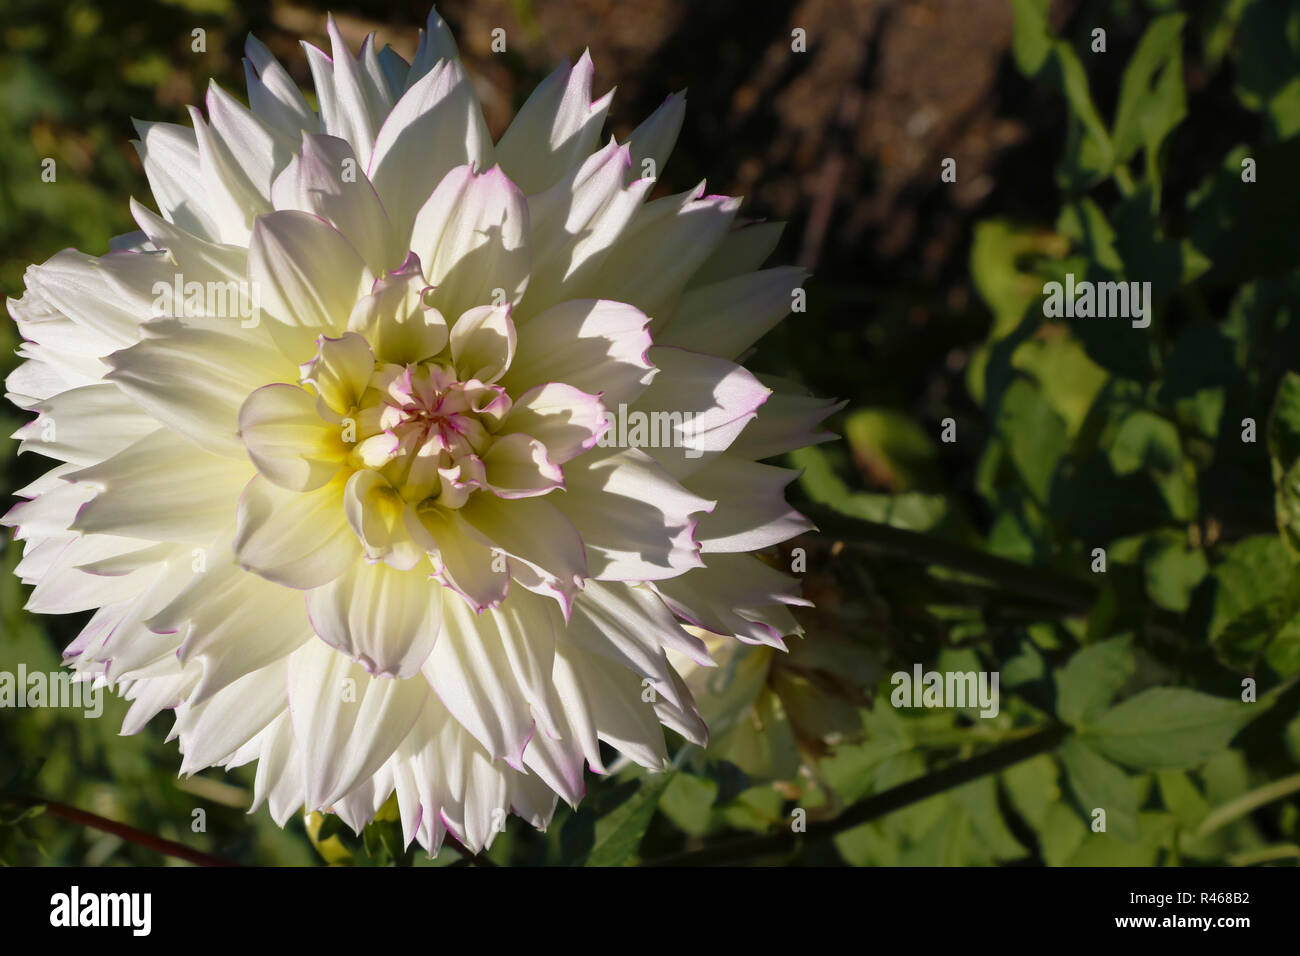 Dahlia cactus flower in the garden close up. Dahlia with creamy white petals Stock Photo